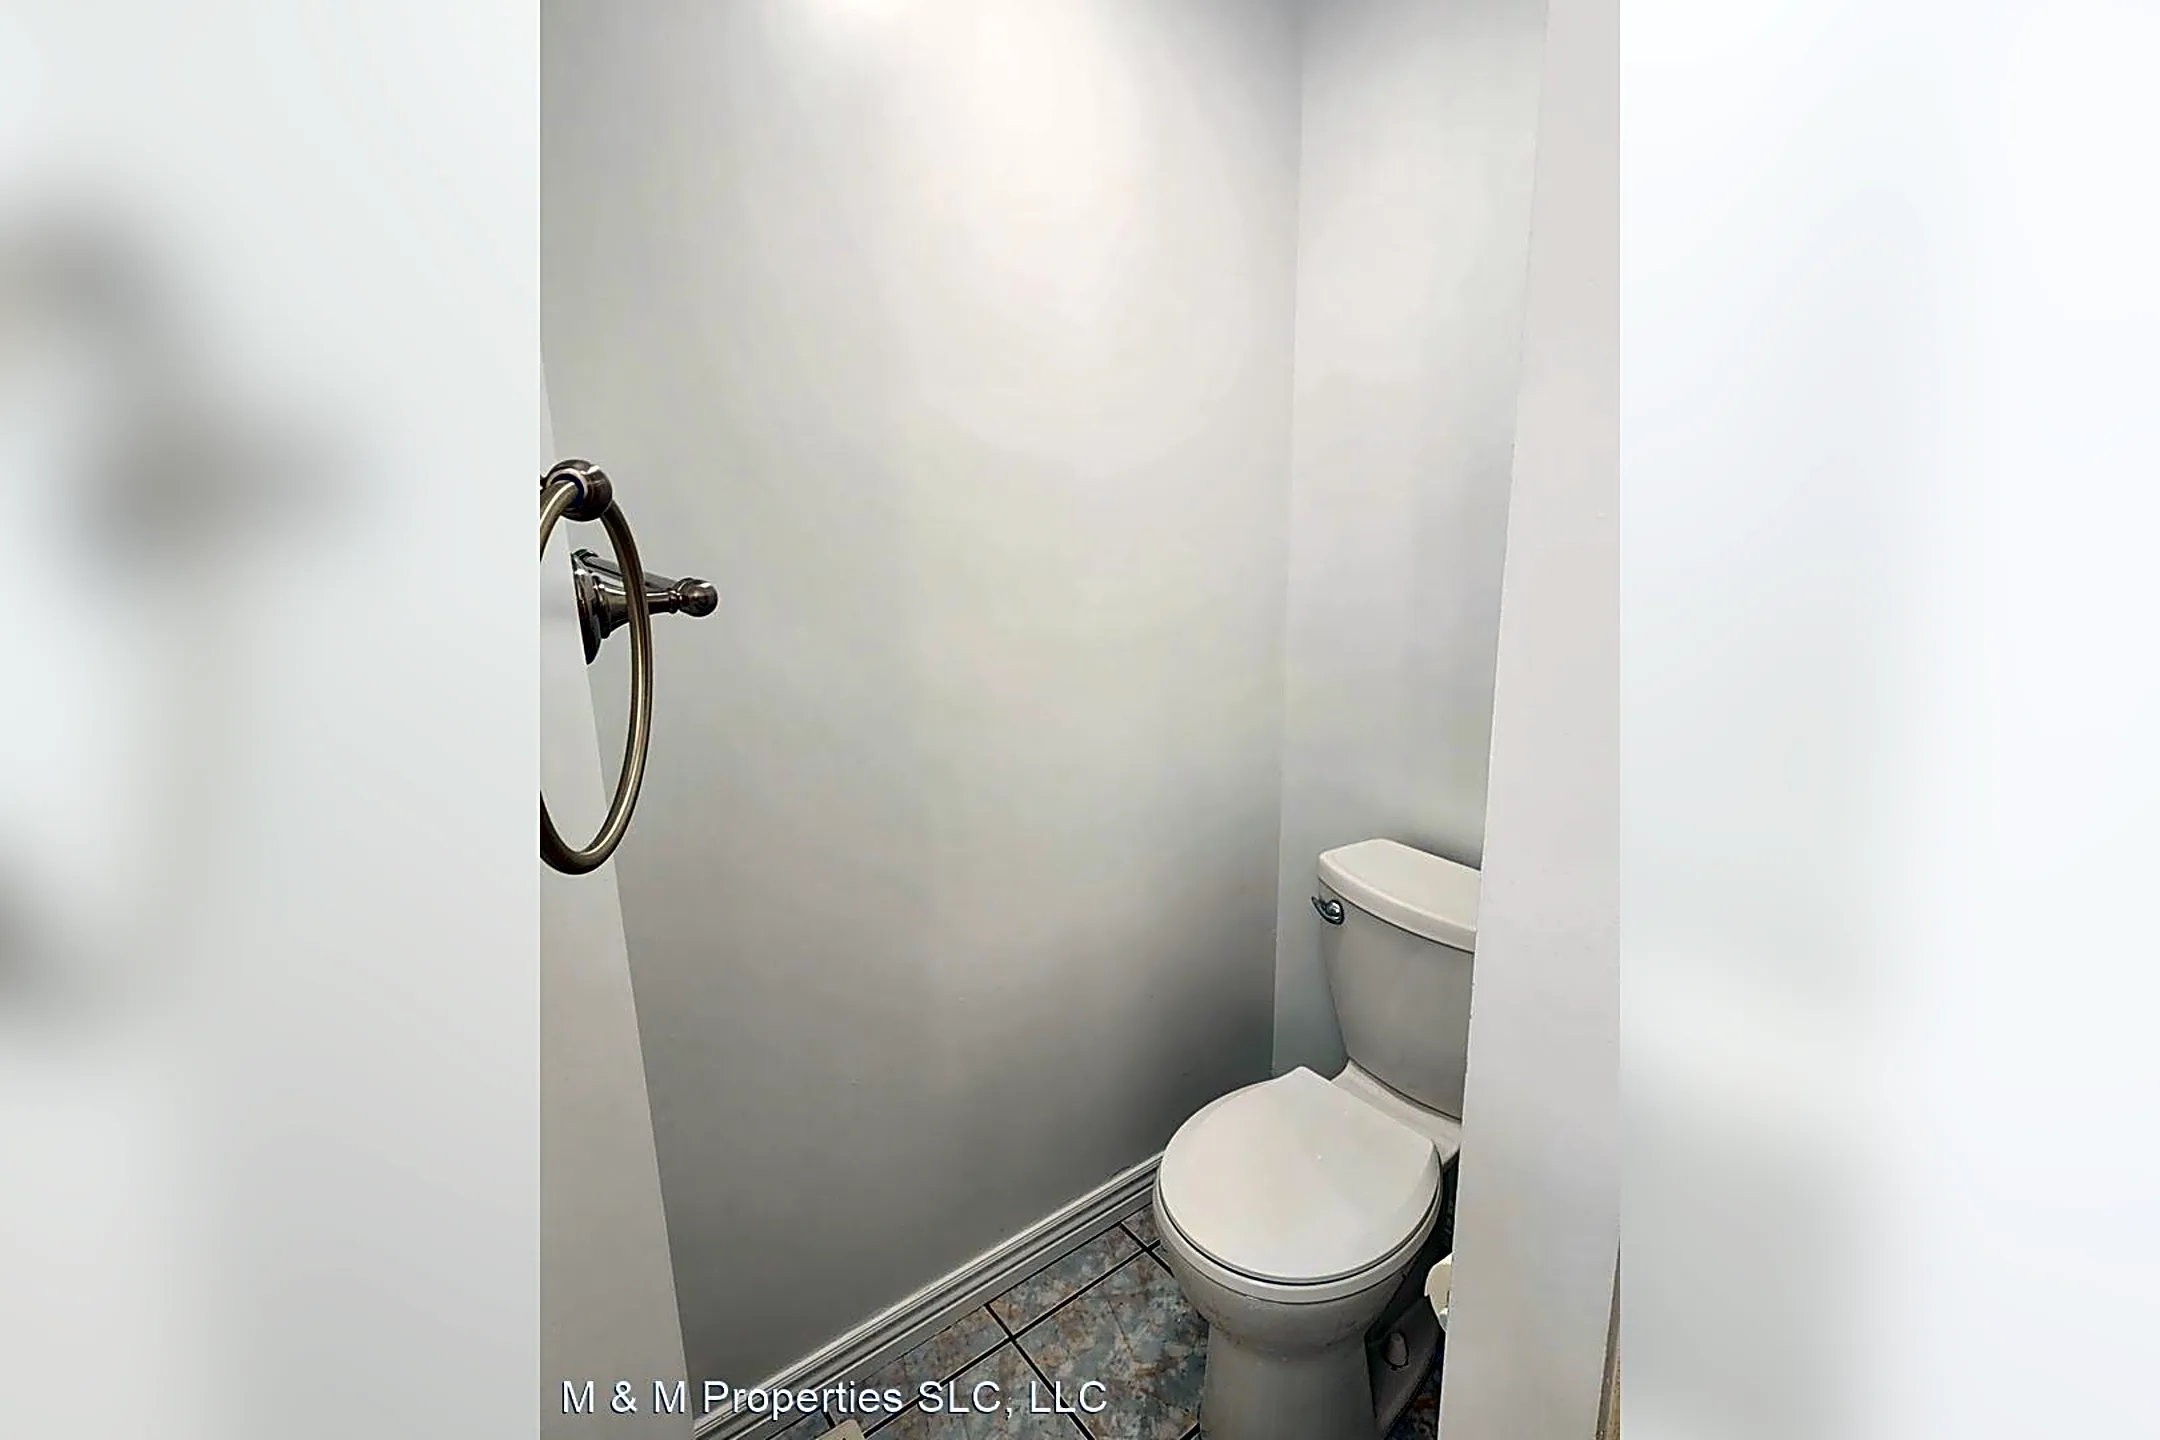 Bathroom - 6087 S 1430 E - Murray, UT